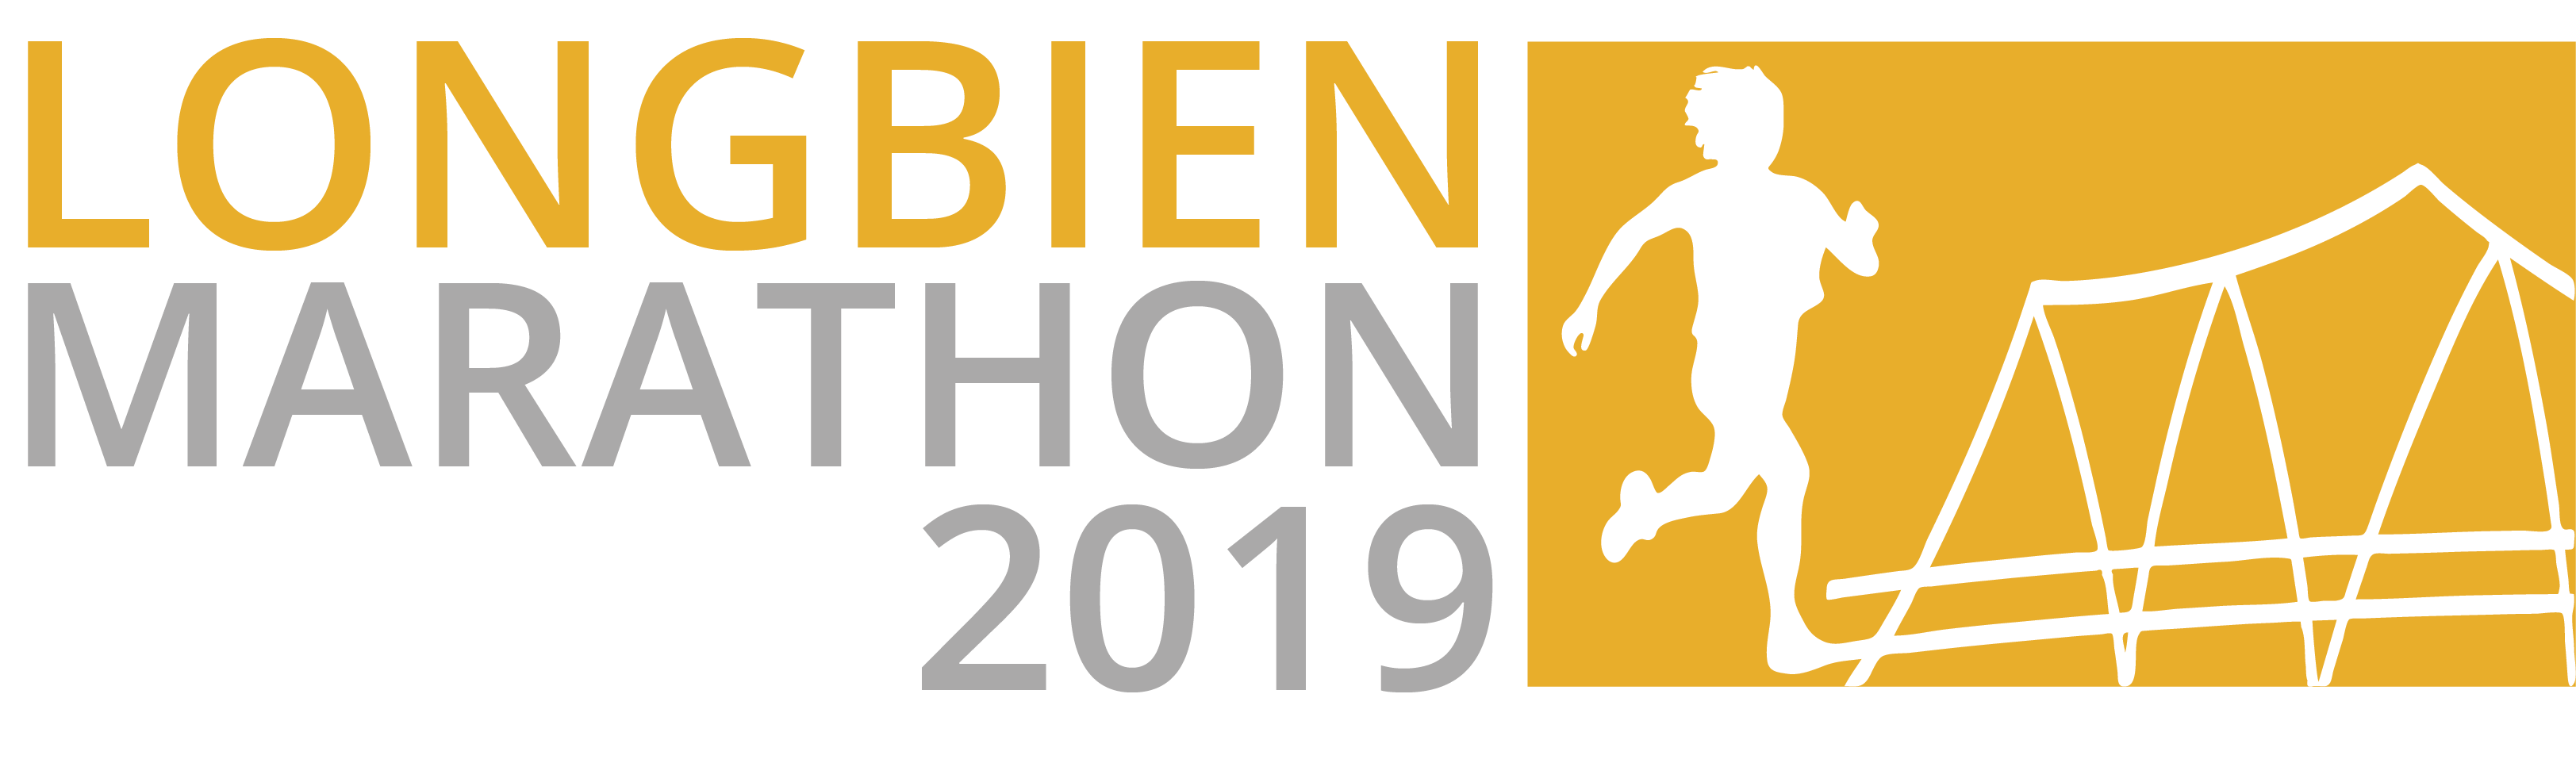 Longbien Marathon 2019